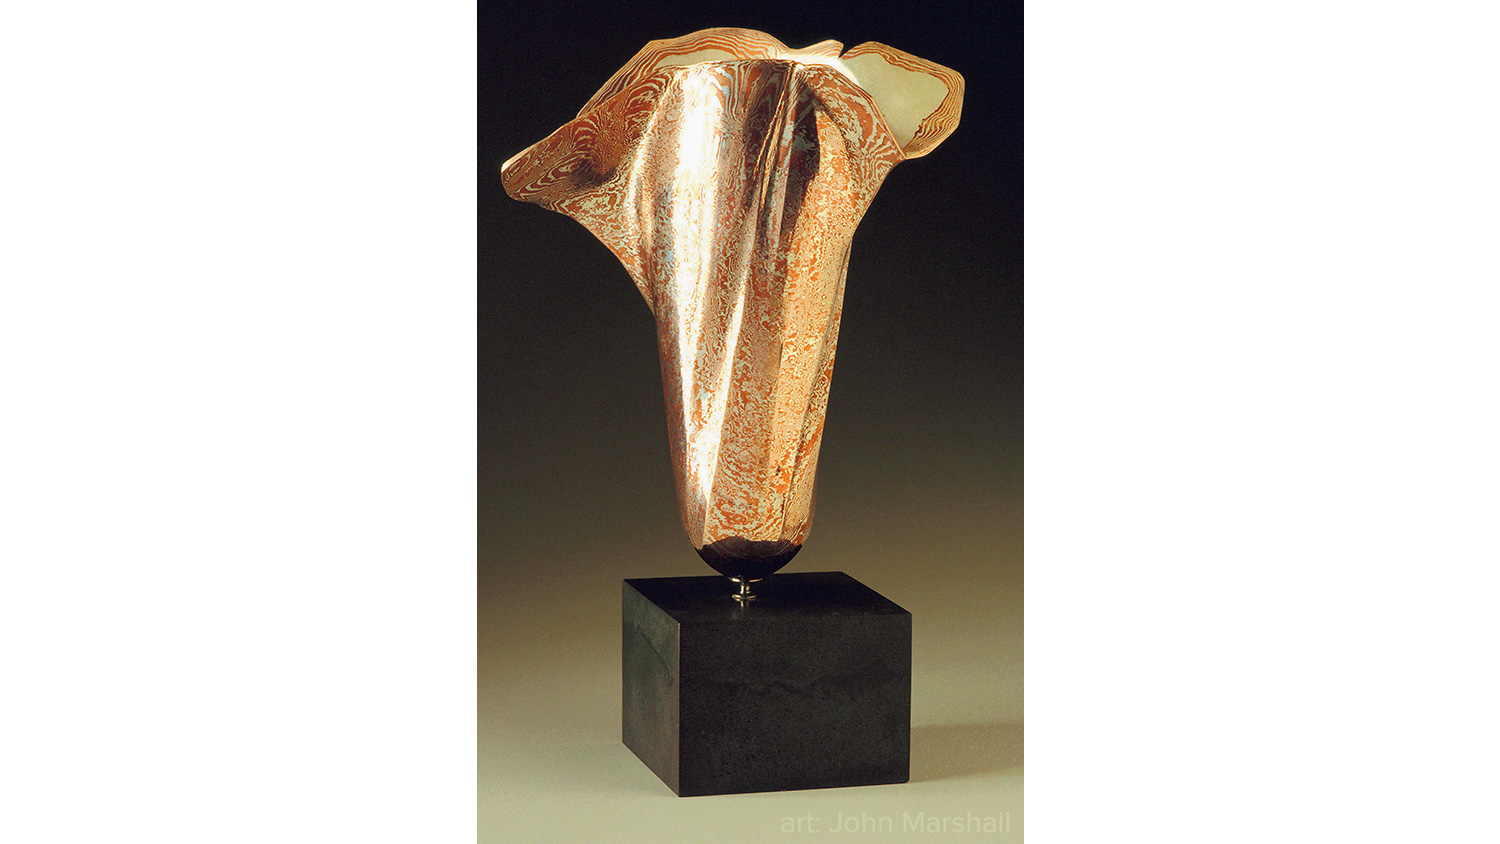 Mokume gane vase by John Marshall